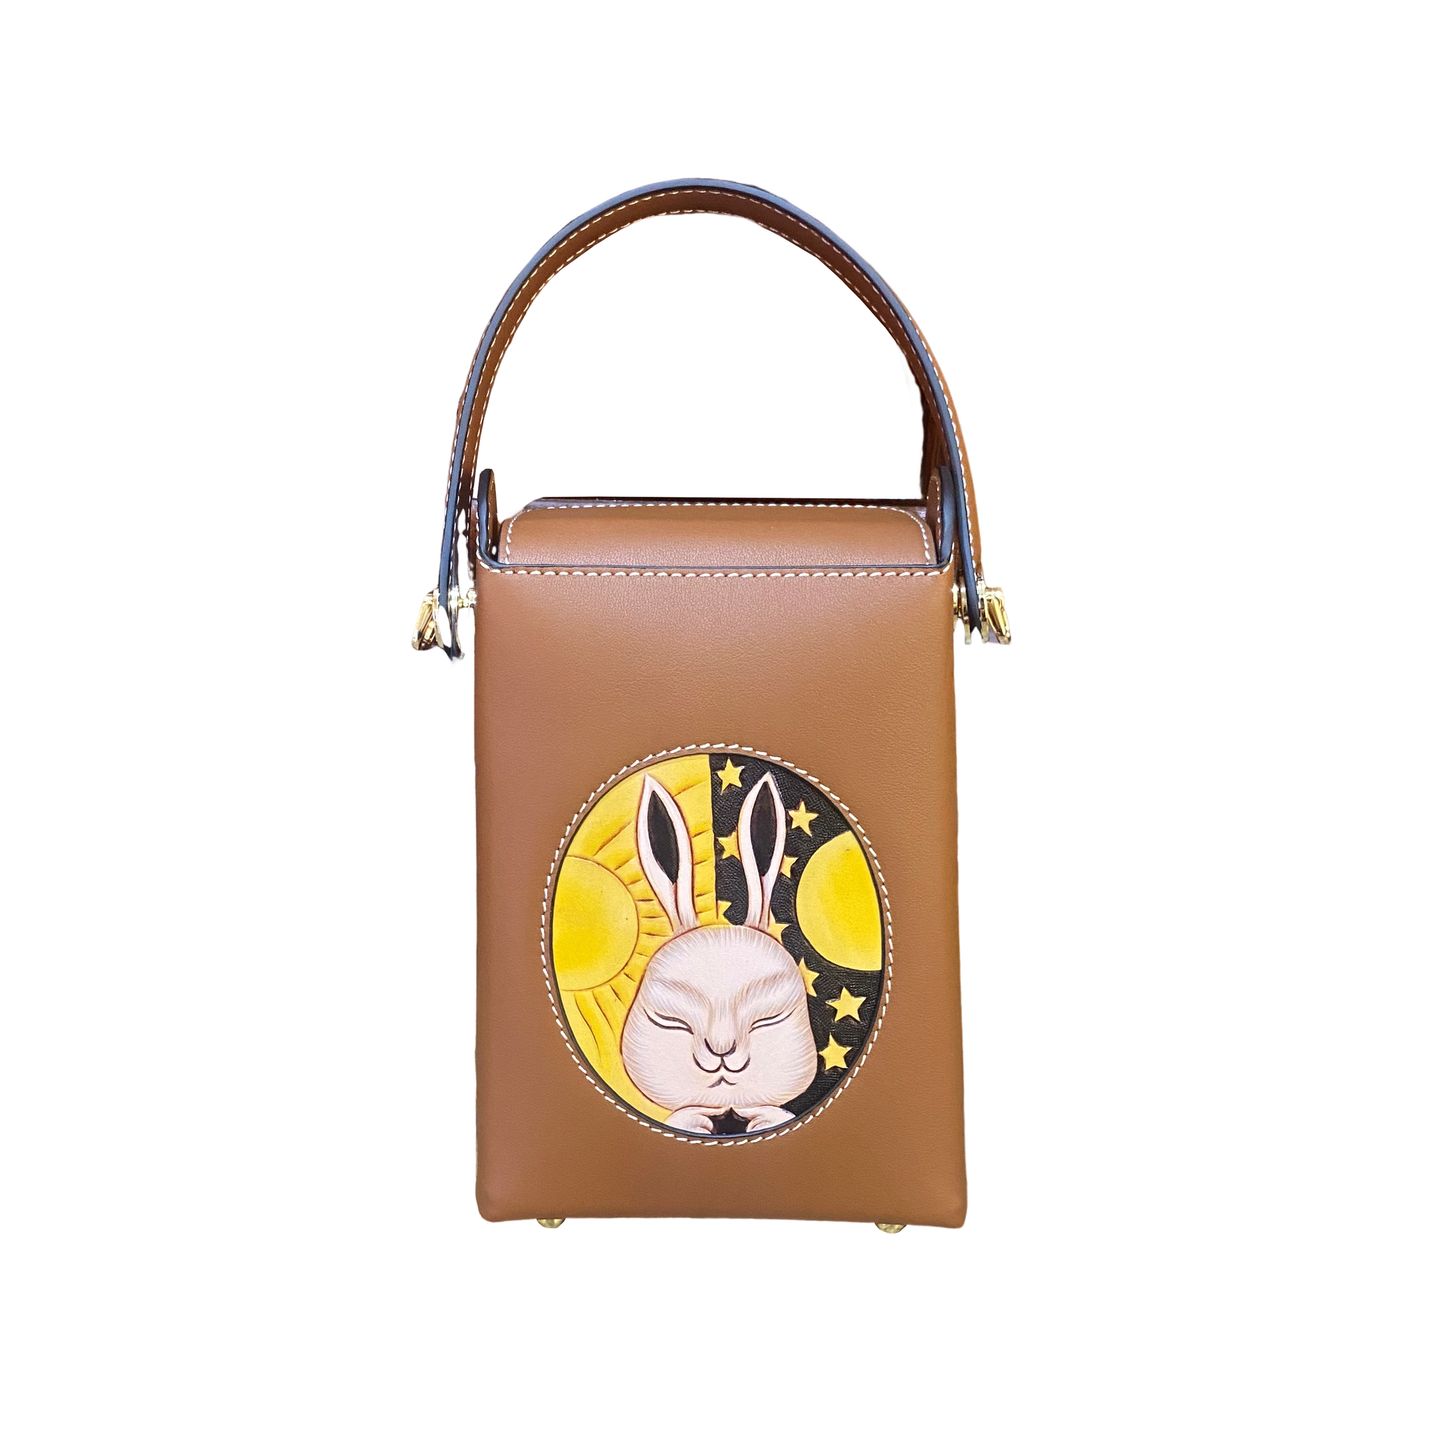 Women's genuine cowhide leather engraved handbag Boite design